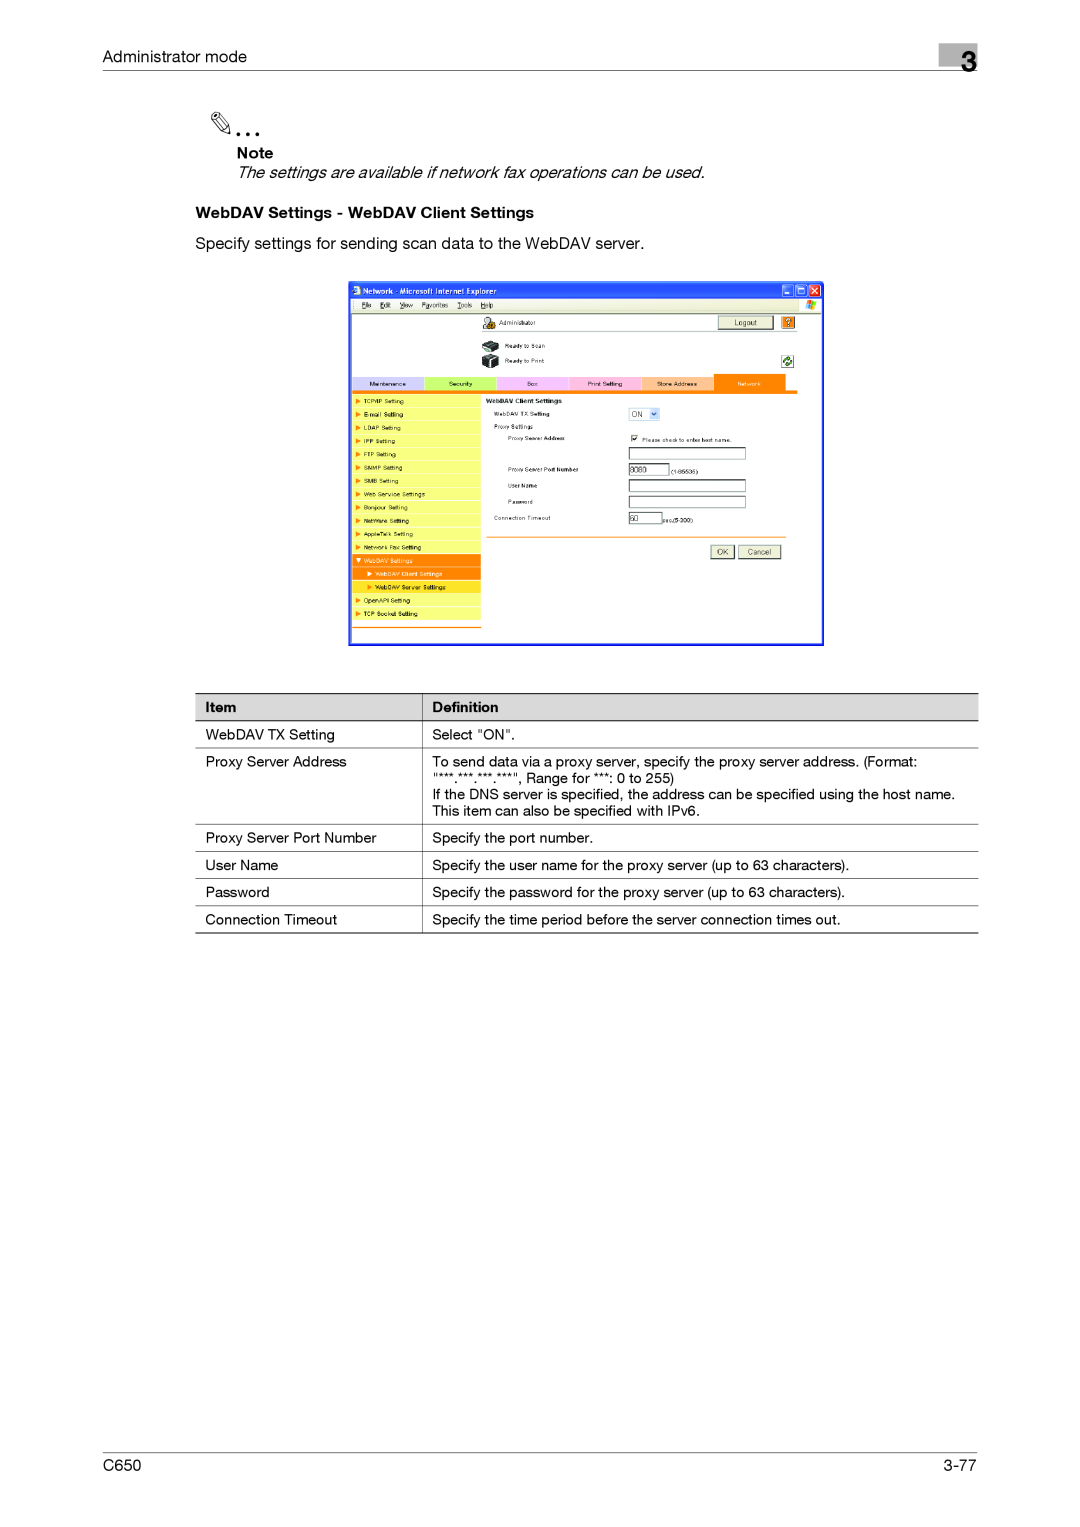 Konica Minolta C650 manual Administrator mode, WebDAV Settings - WebDAV Client Settings, 3-77 